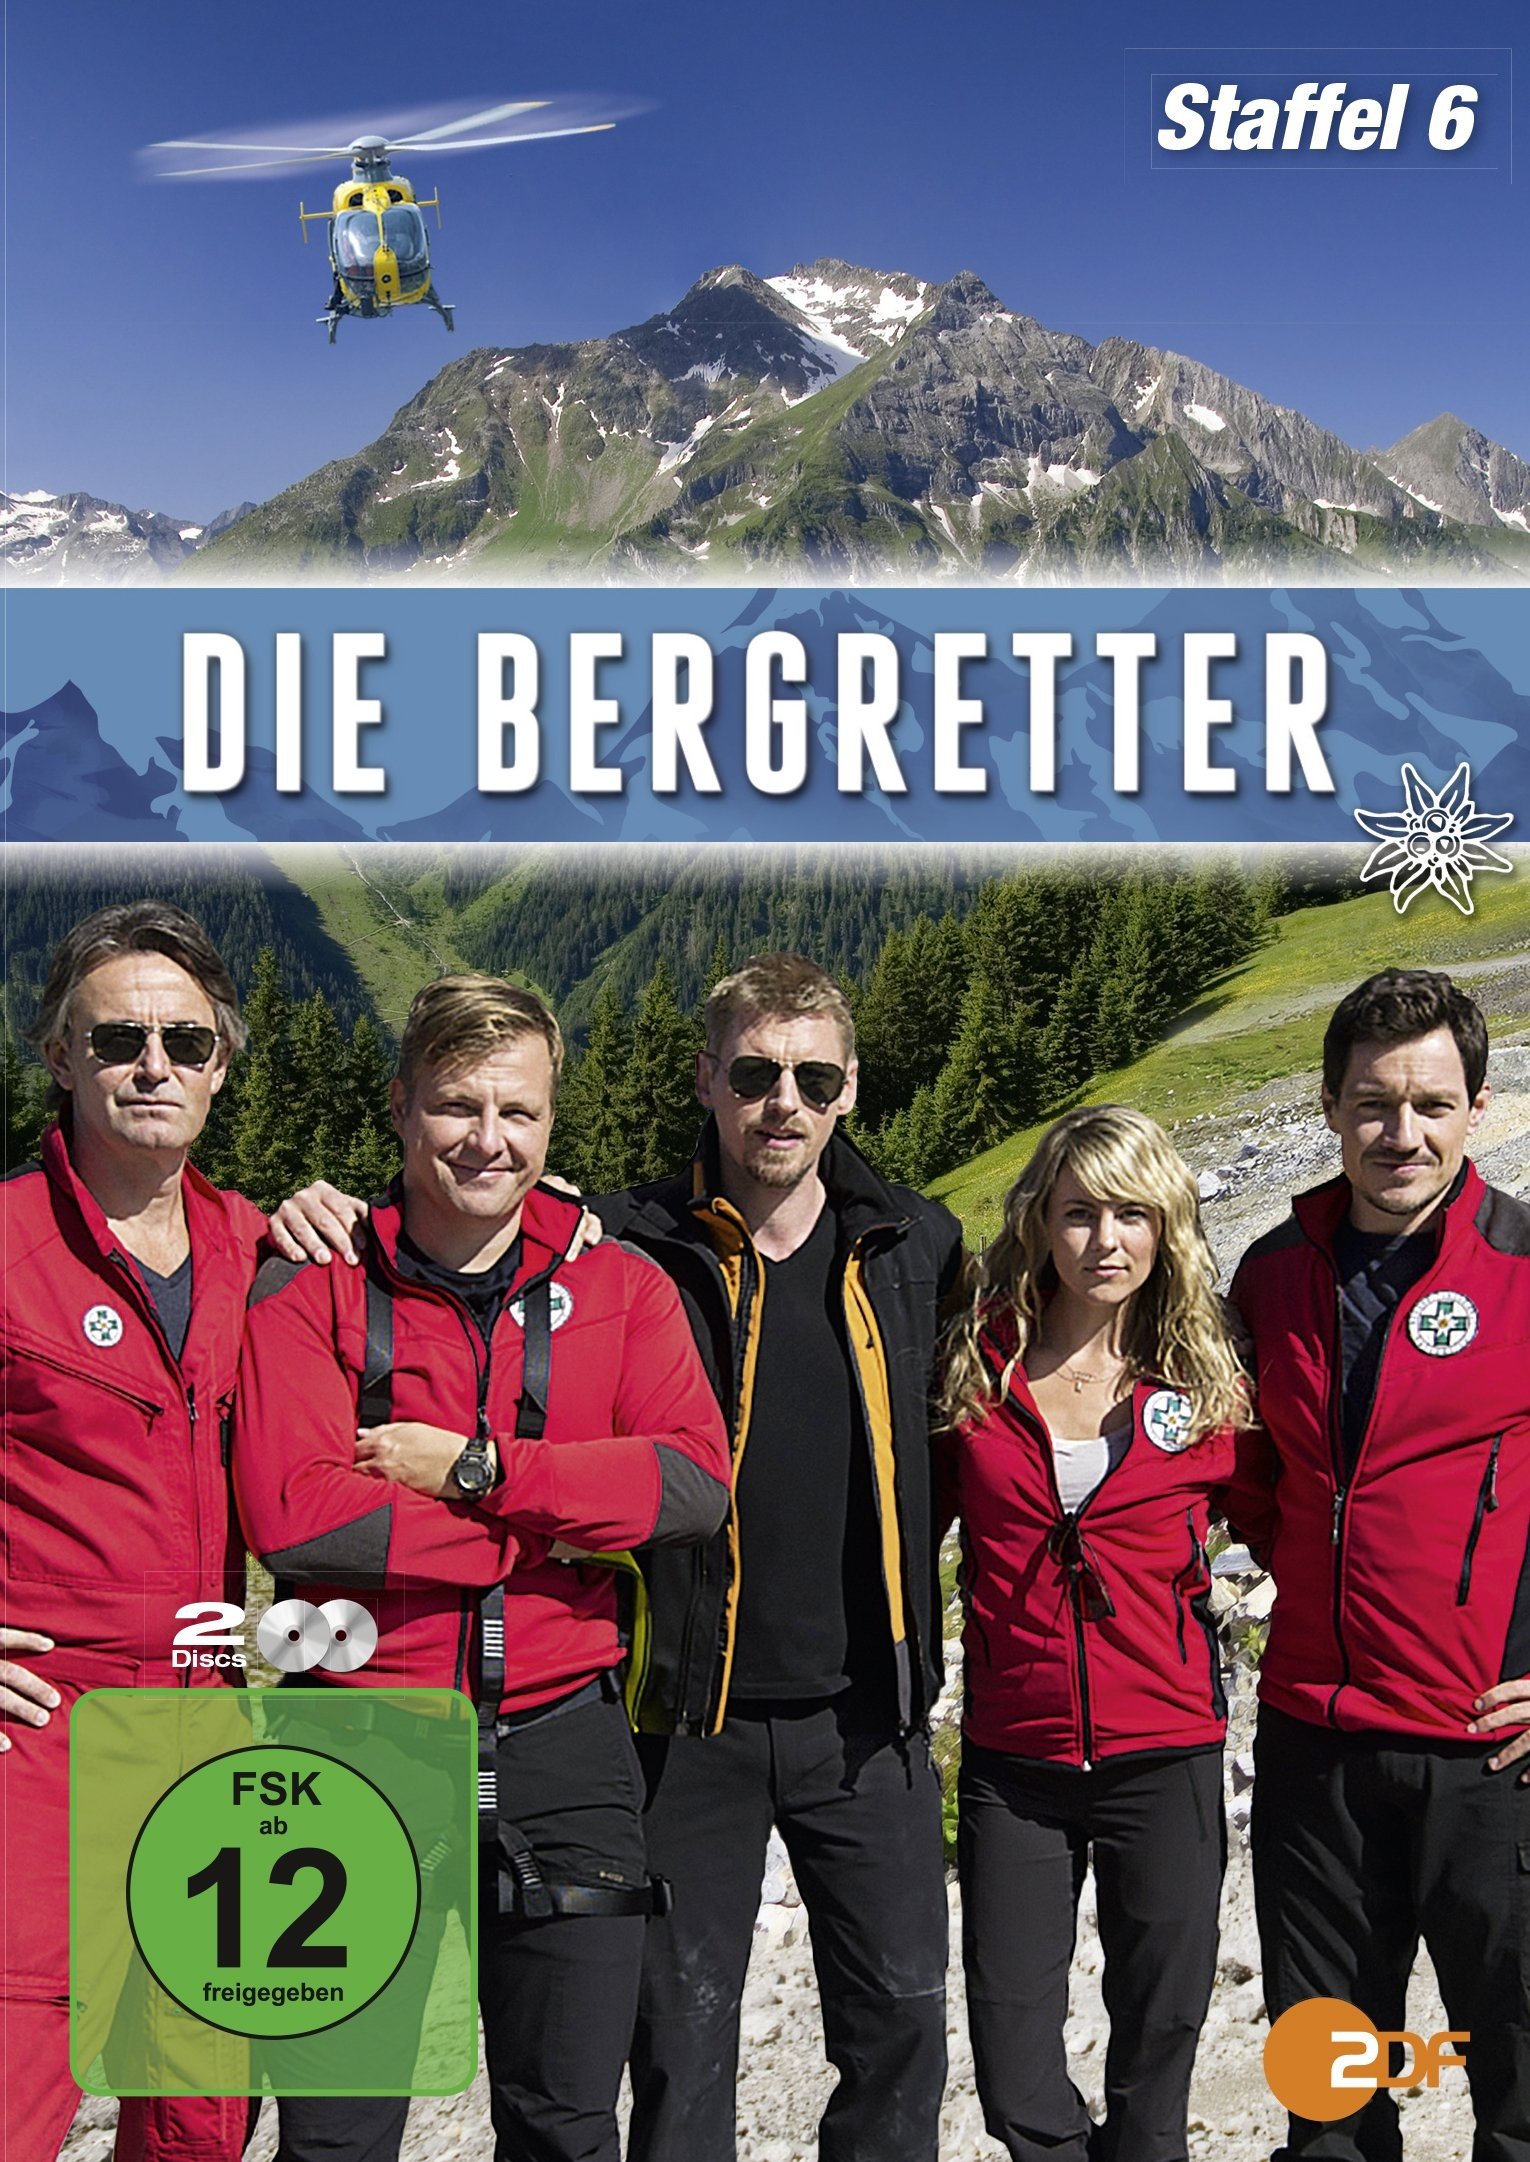 Die Bergretter - Staffel 6 [2 DVDs] (Neu differenzbesteuert)